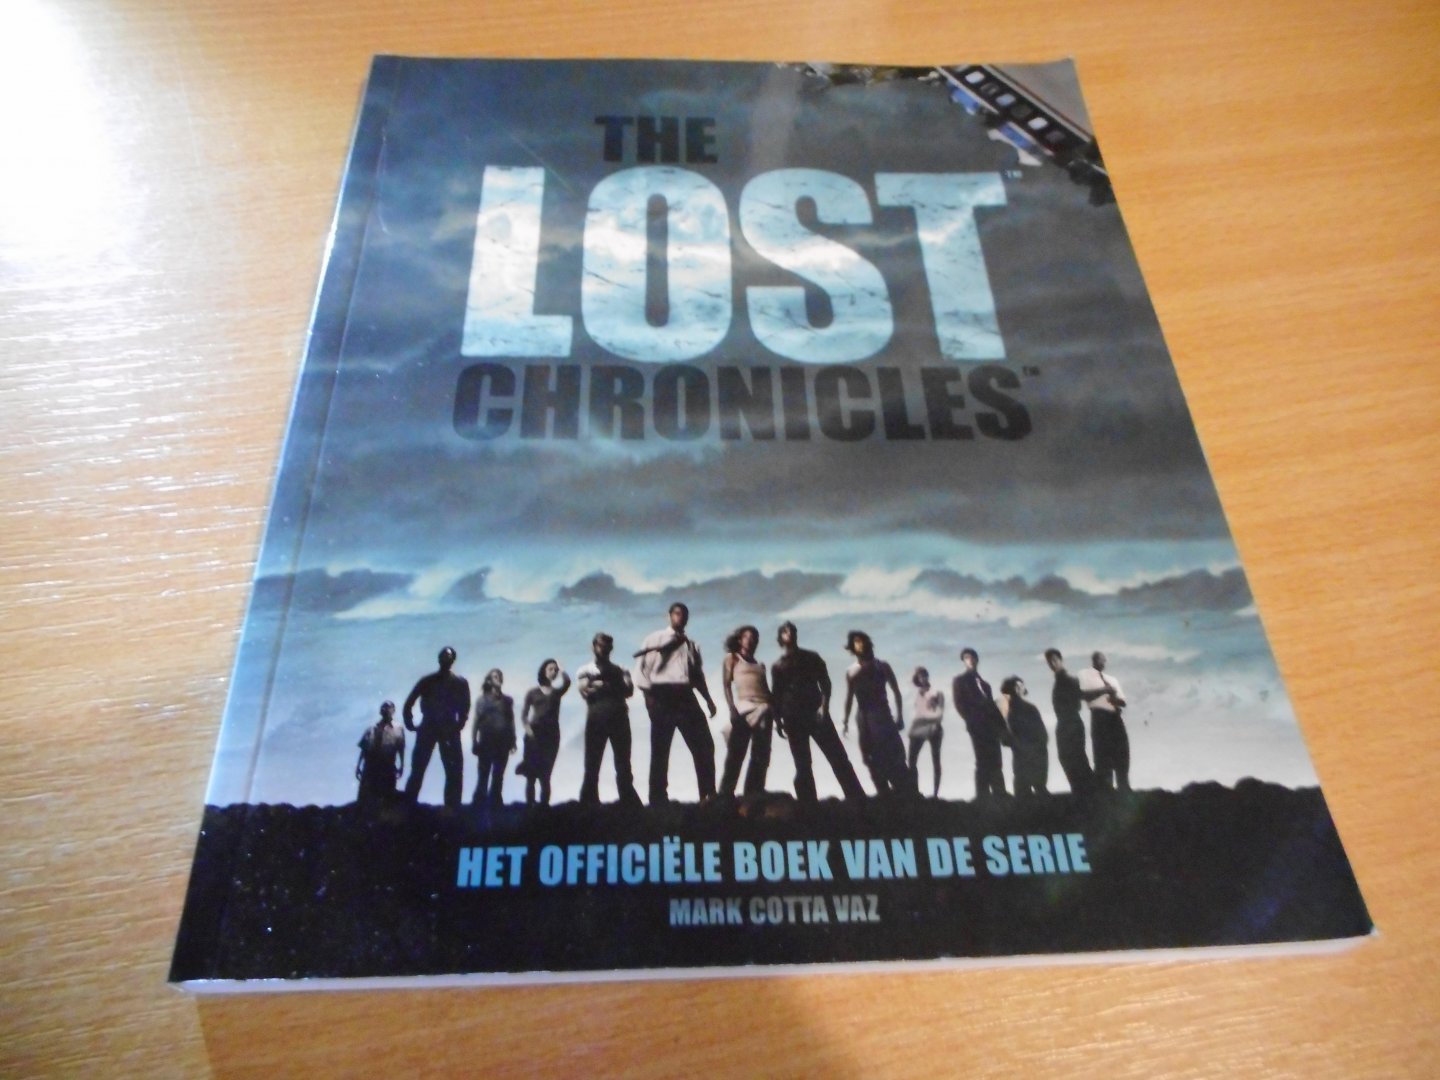 Vaz Cotta, Mark - The lost chronicles. Het officiele boek van de serie.